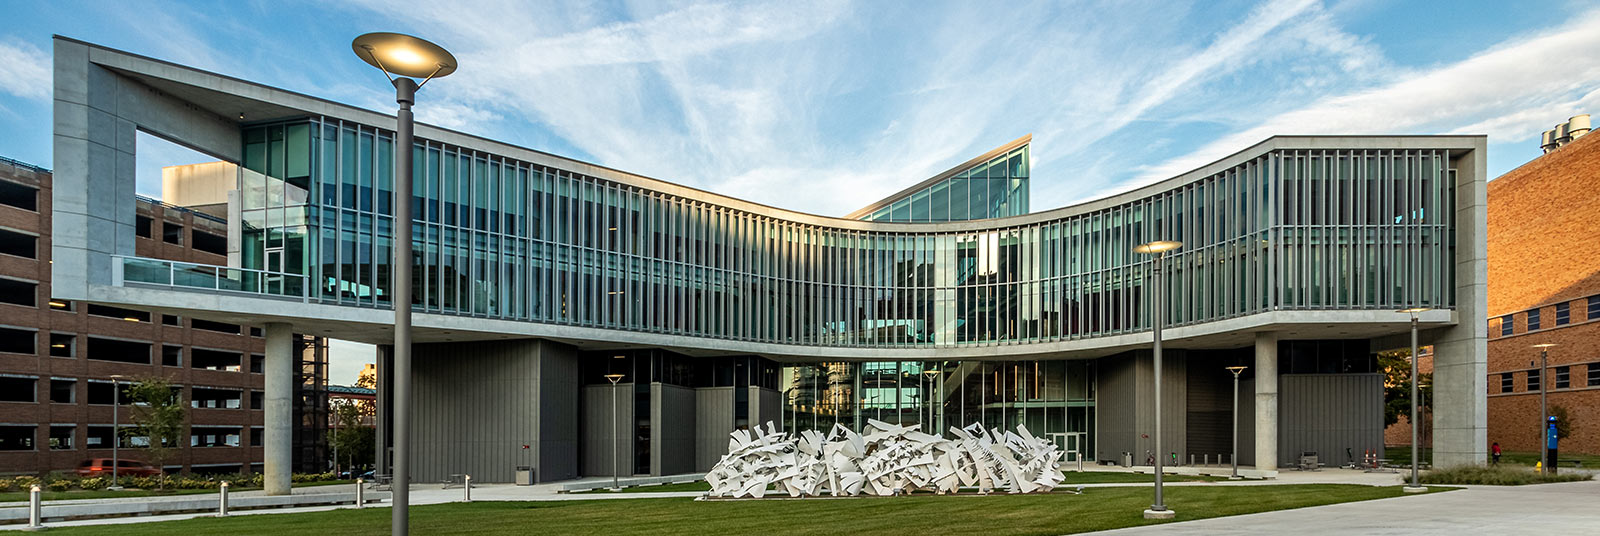 View of the University of Cincinnati Health Sciences Building.